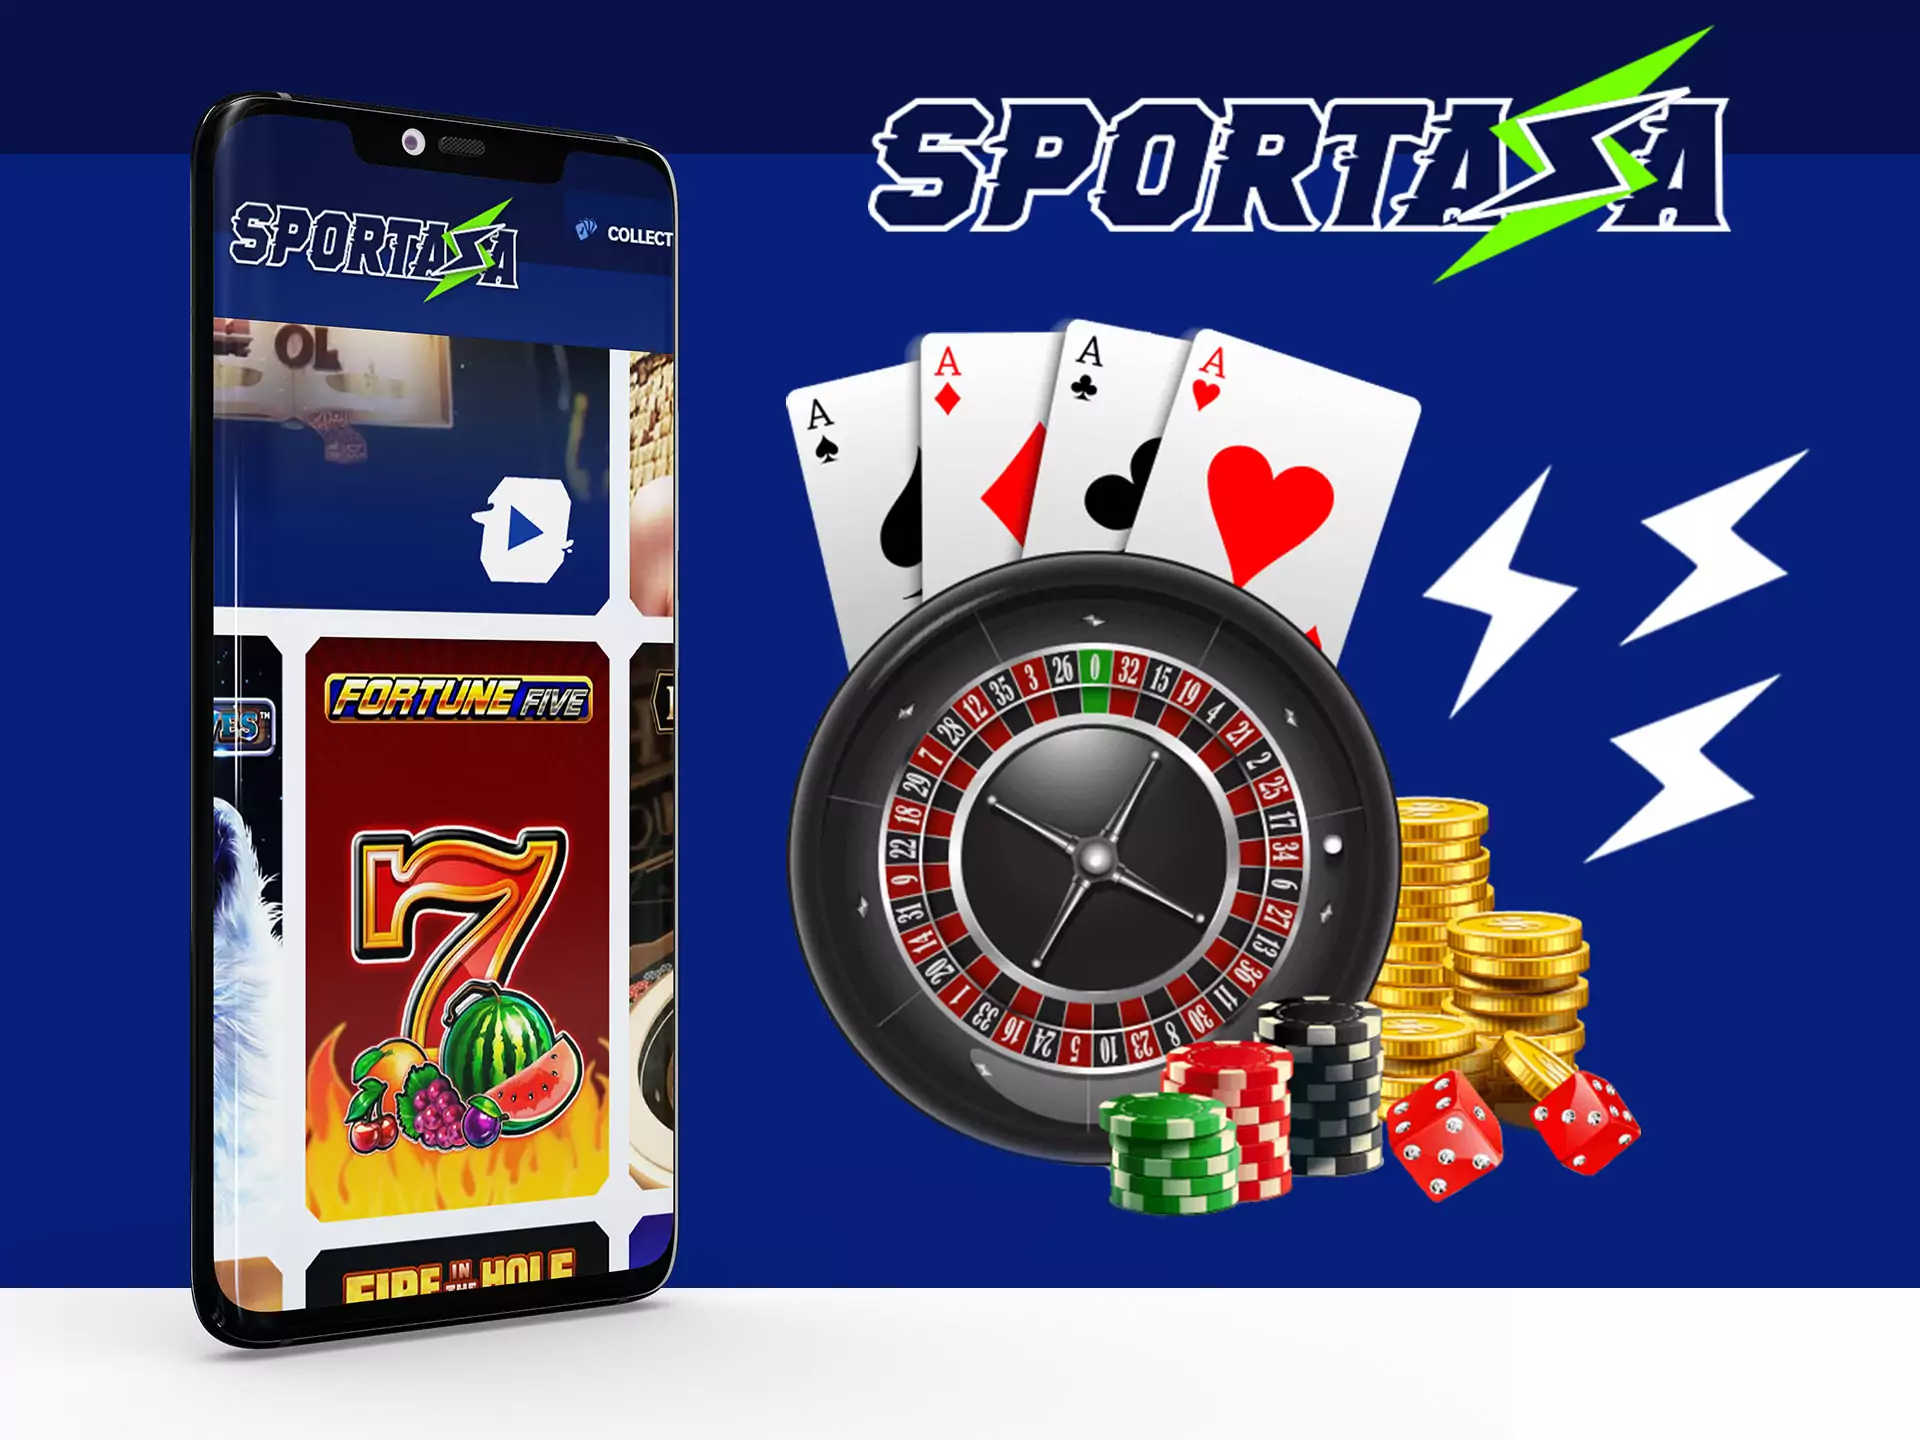 Sportaza online casino provide wide choice of games.